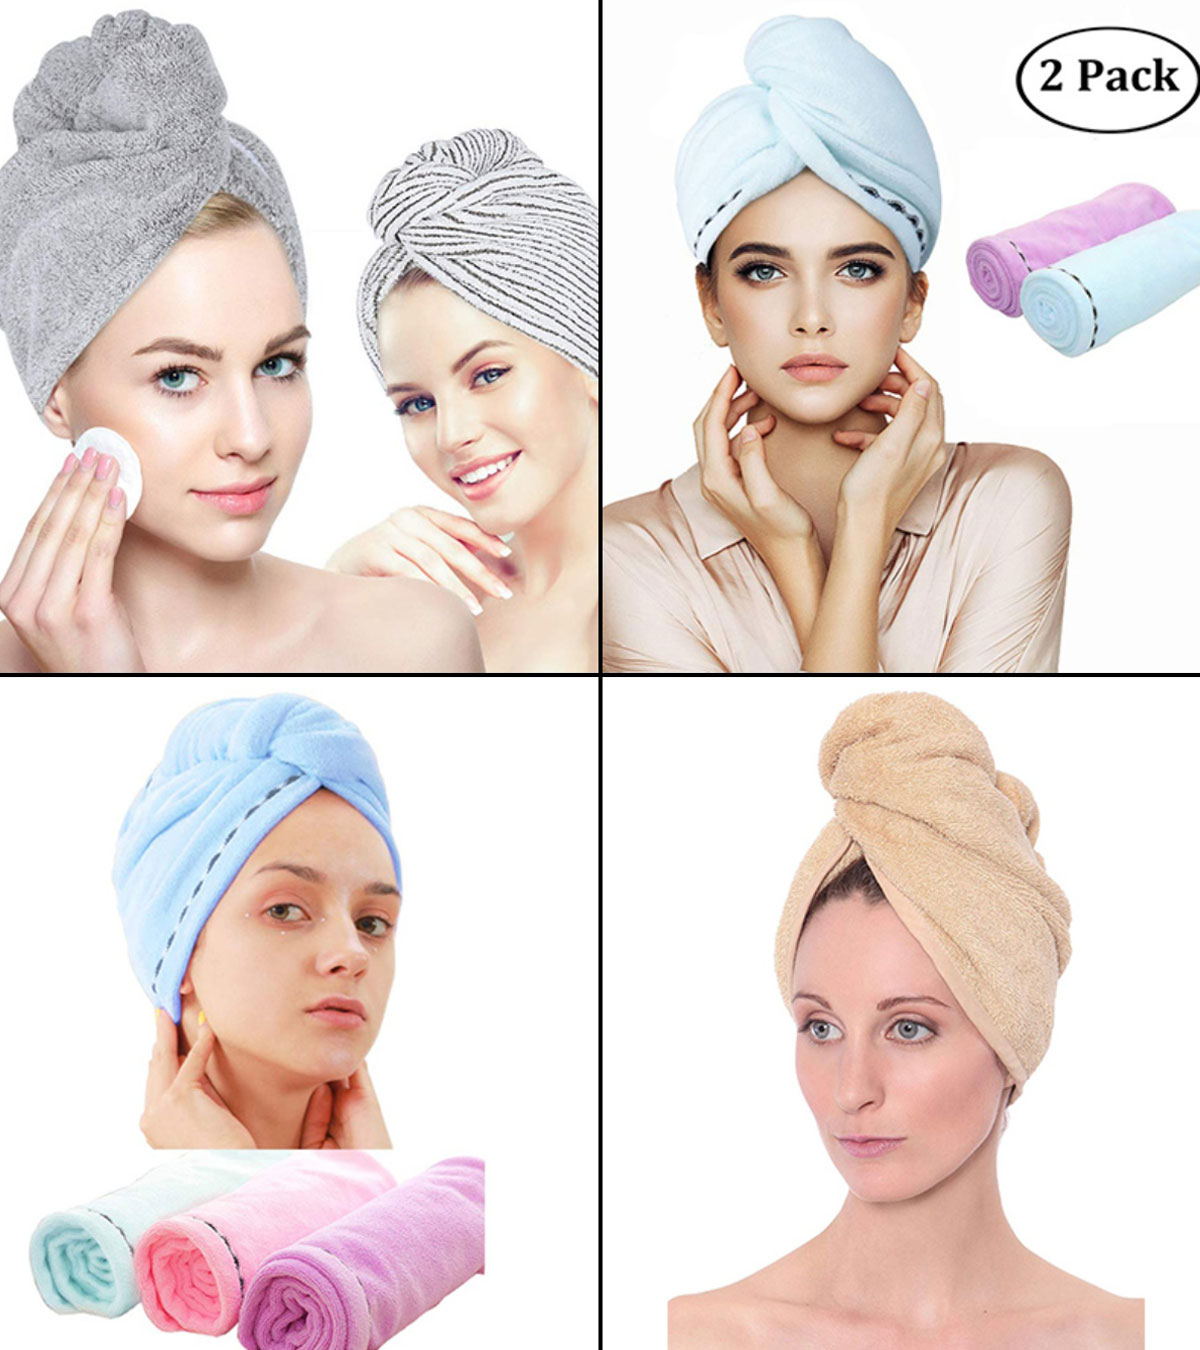 https://www.momjunction.com/wp-content/uploads/2020/02/Best-Fast-Drying-Hair-Towels1.jpg